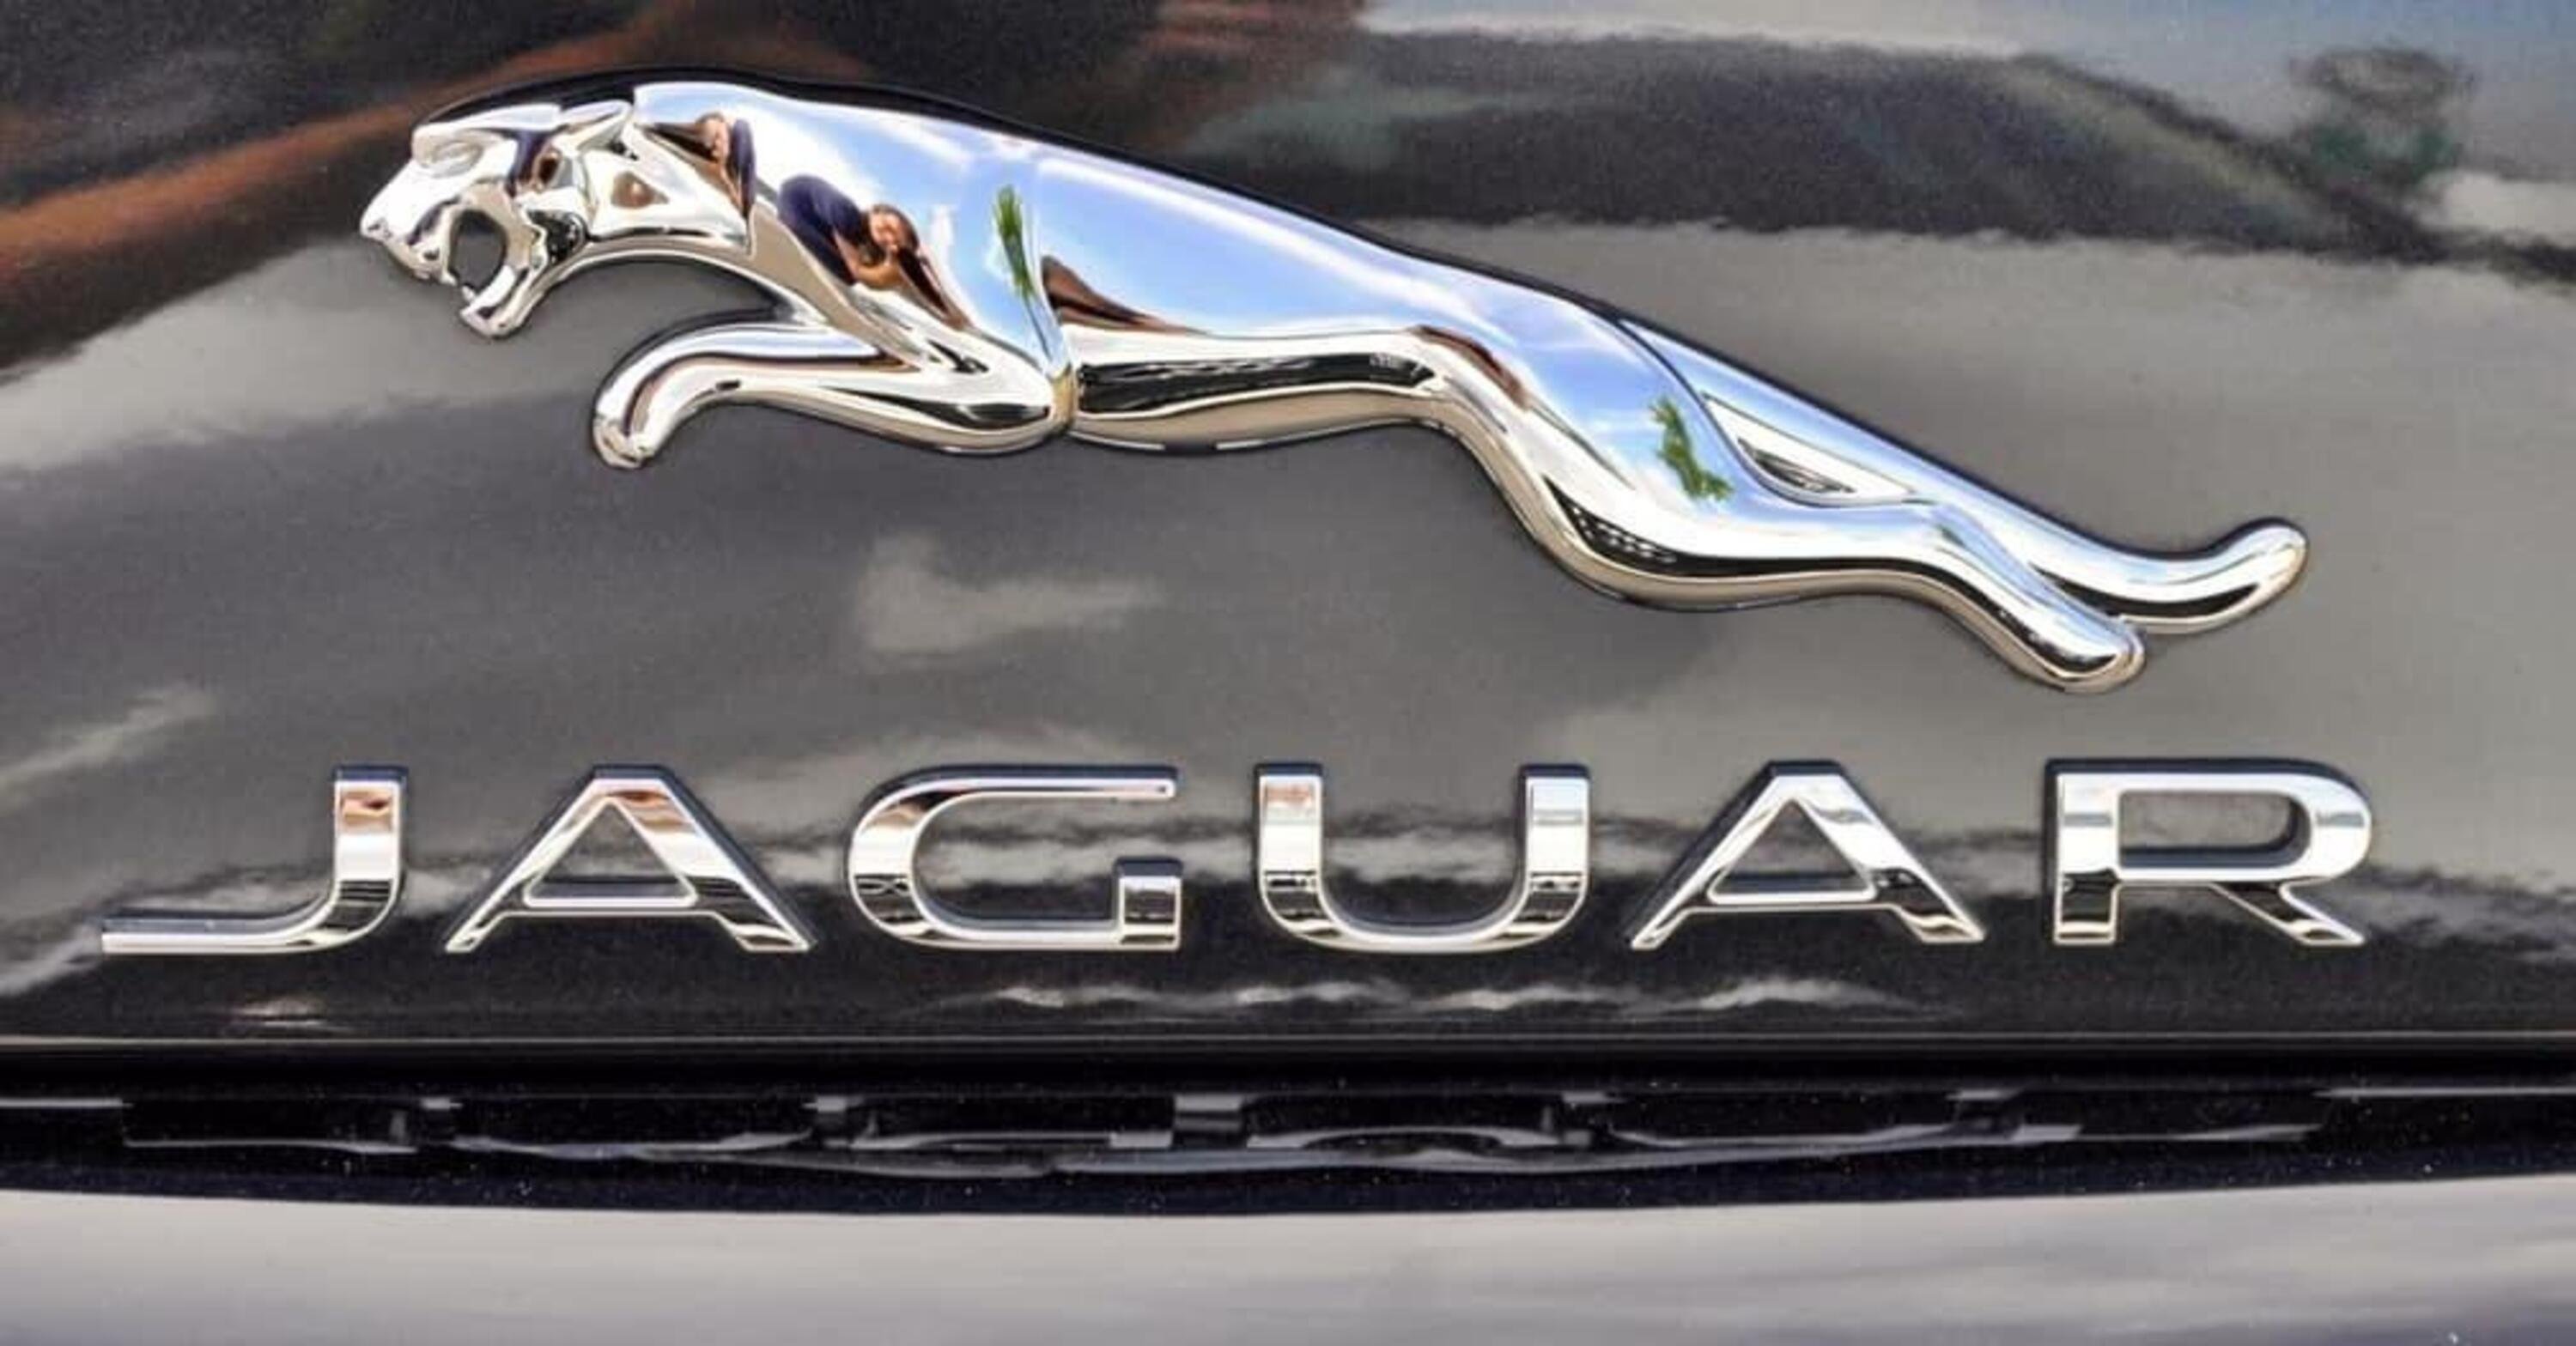 Grace, Pace and Space: le nuove Jaguar elettriche ispirate da Sir William Lyon 